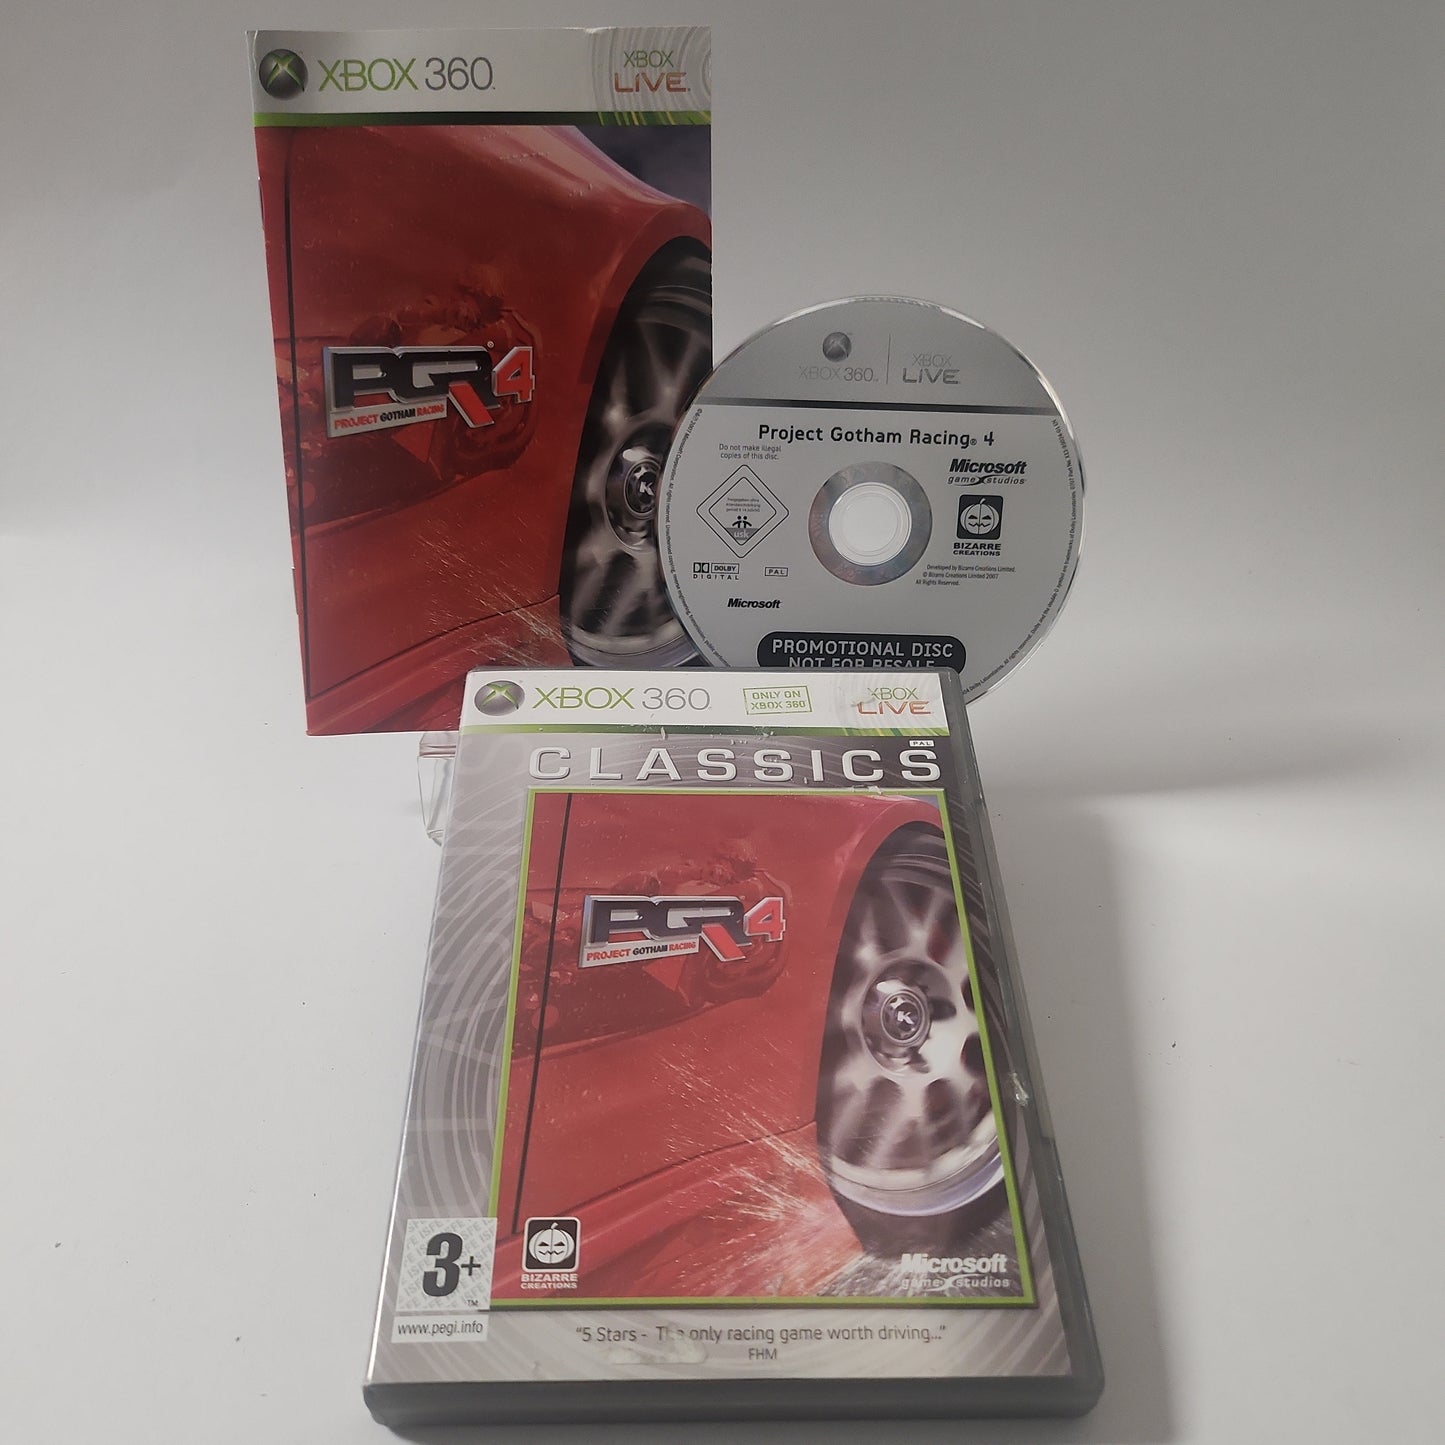 Project Gothem Racing Promo Disc Xbox 360 Classics